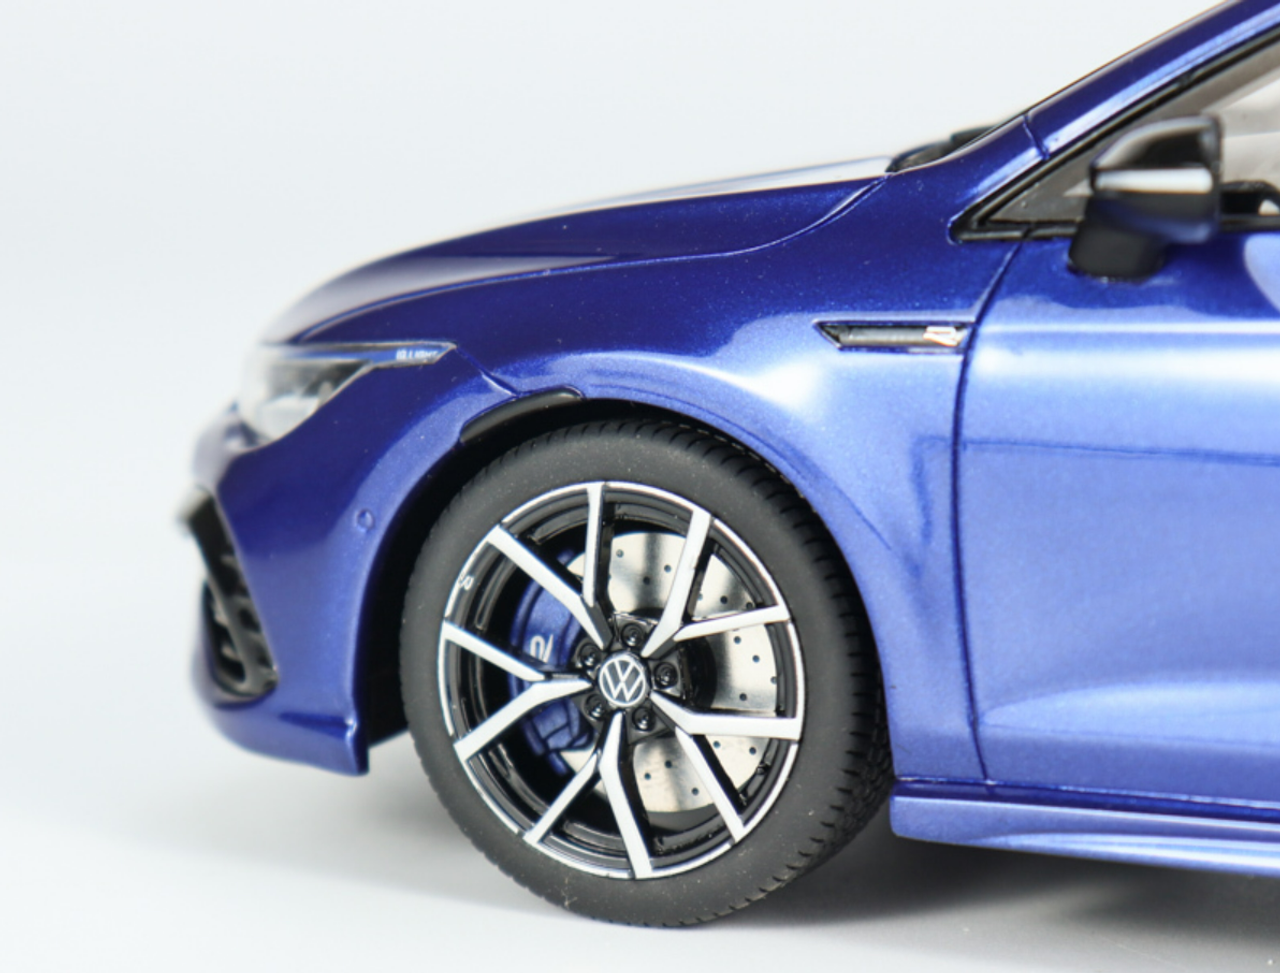 1/18 OTTO 2021 Volkswagen Golf VIII R (Blue) Resin Car Model